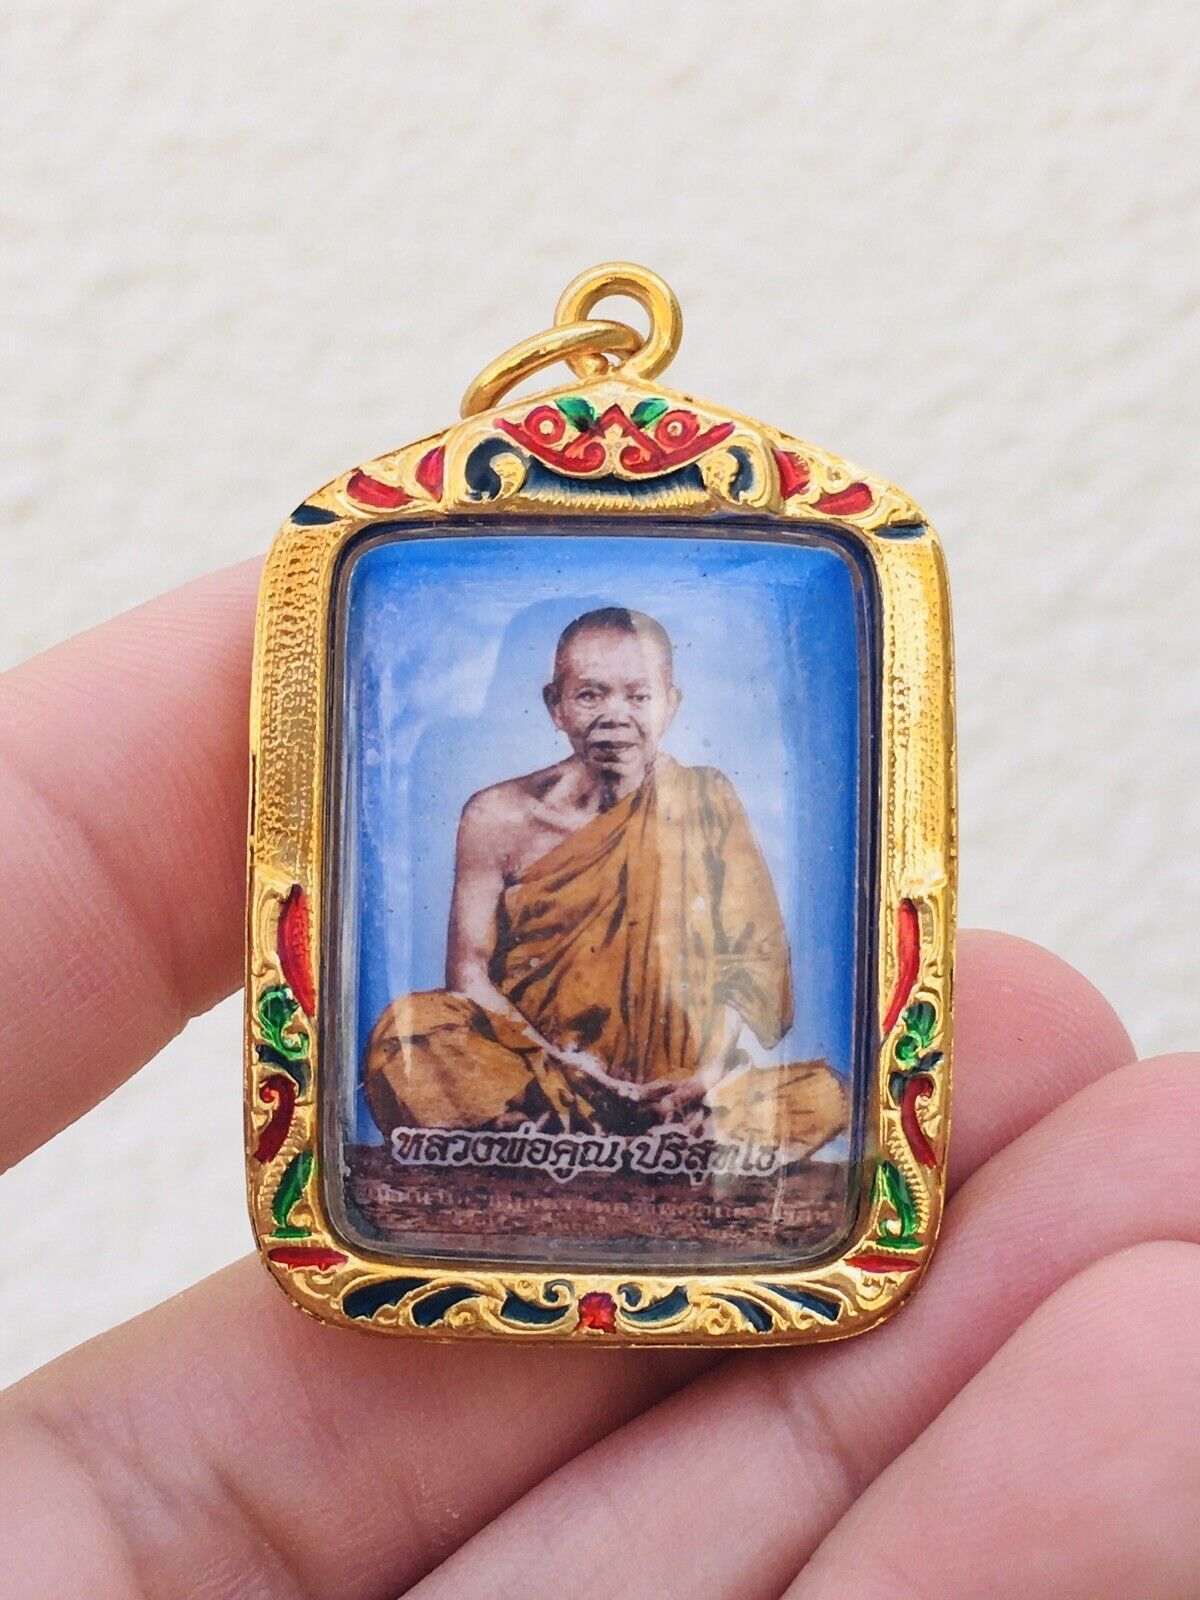 Gorgeous Mini Phra Lp Koon Thai Amulet Talisman Charm Luck Protection Vol. 008.1